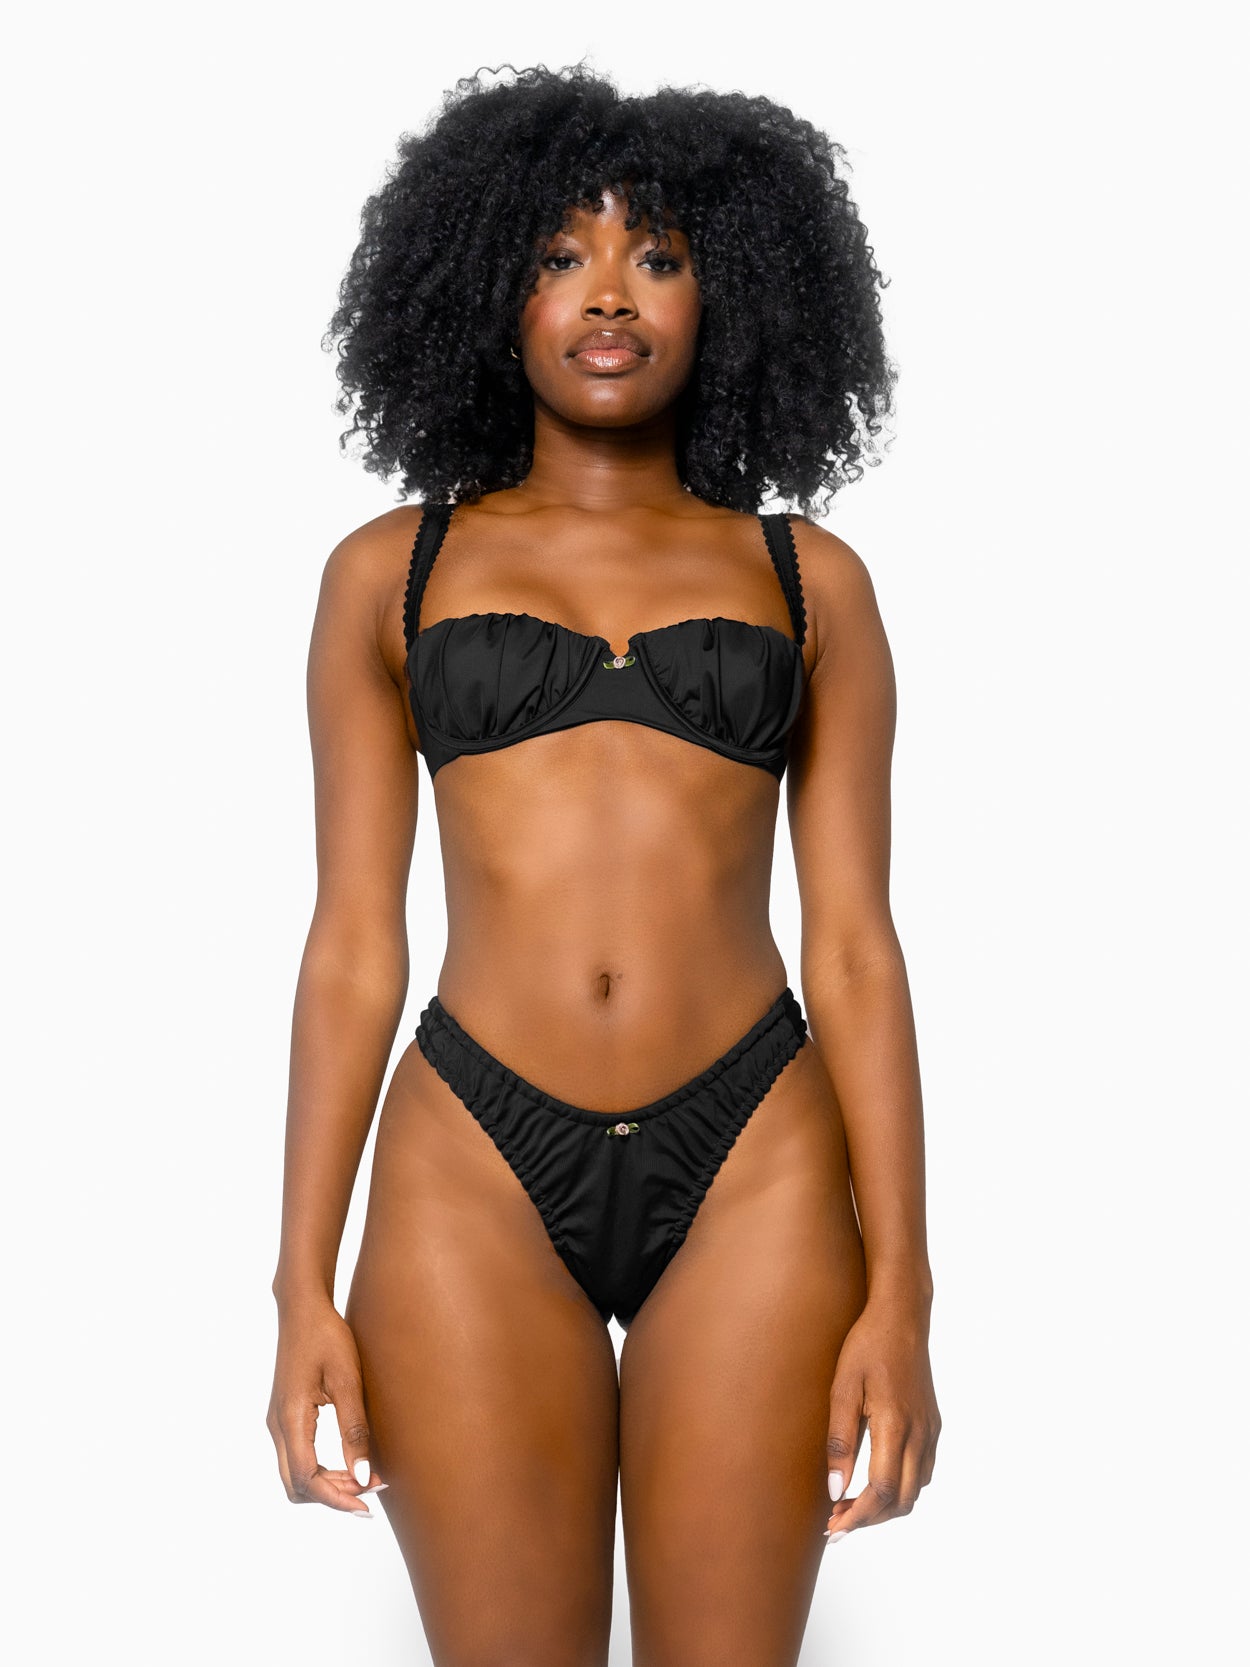 a model wears a black balconette bikini top with matching bottoms